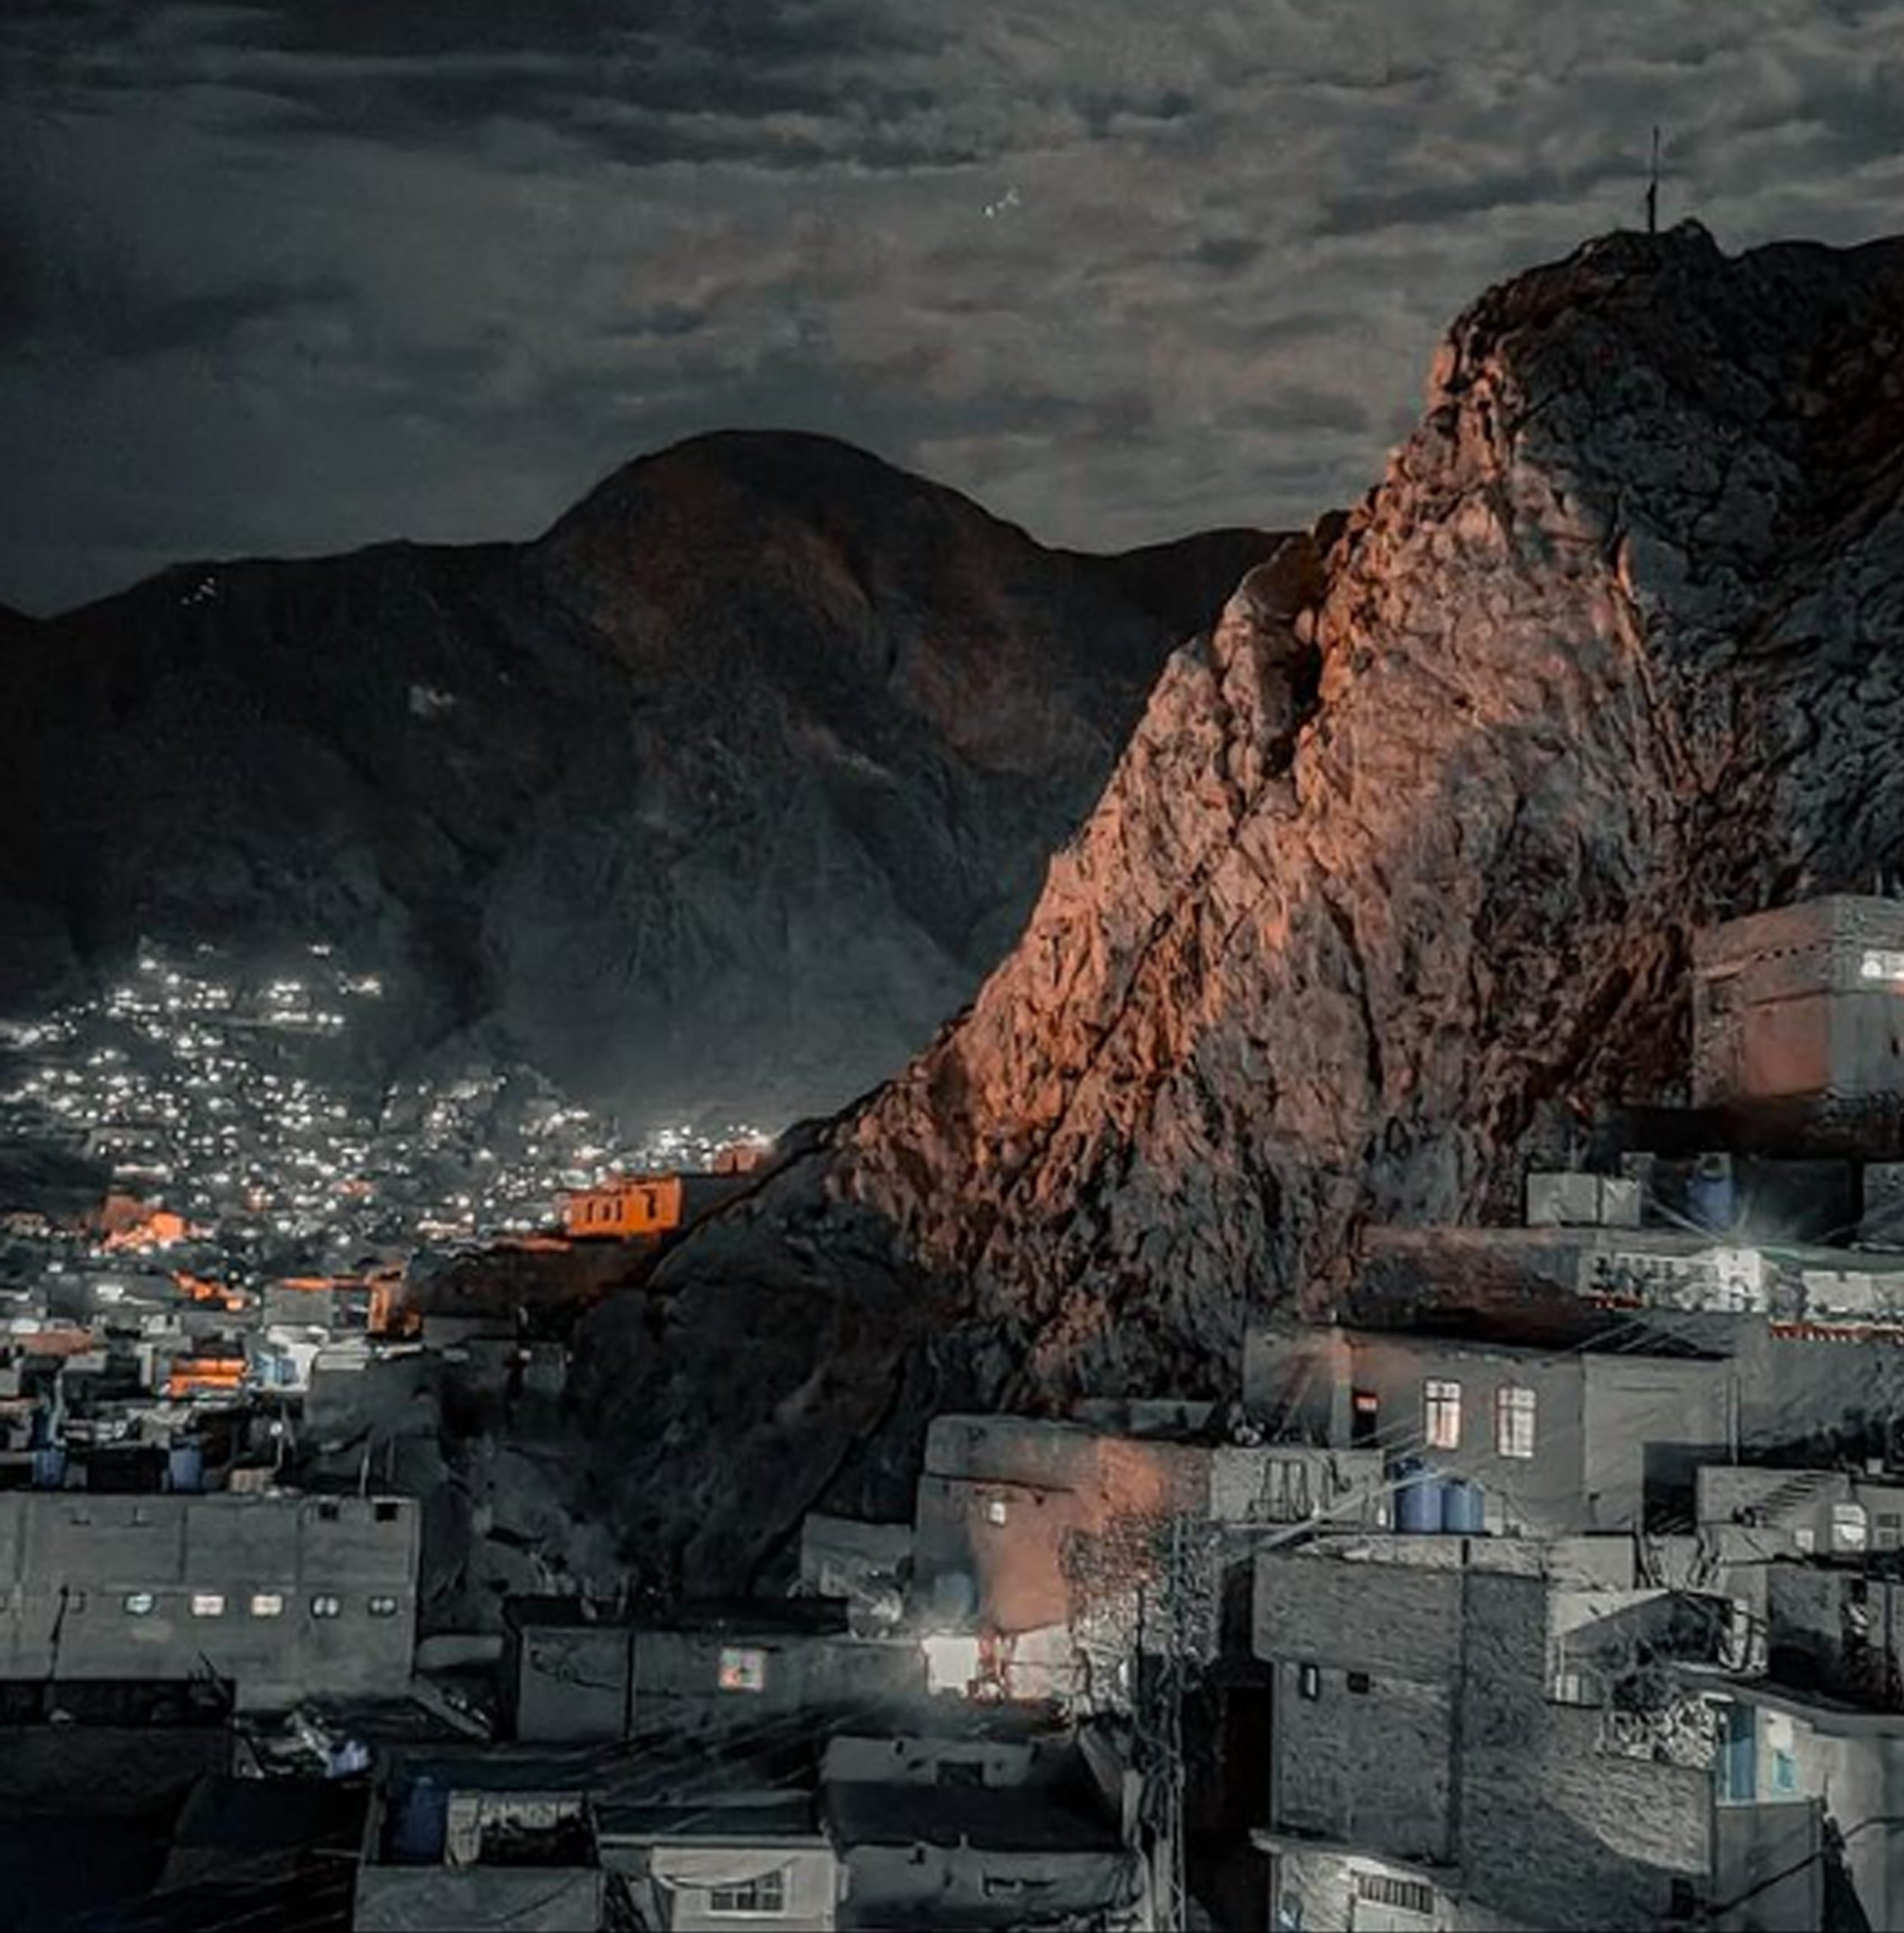 Mariabad, Quetta at night